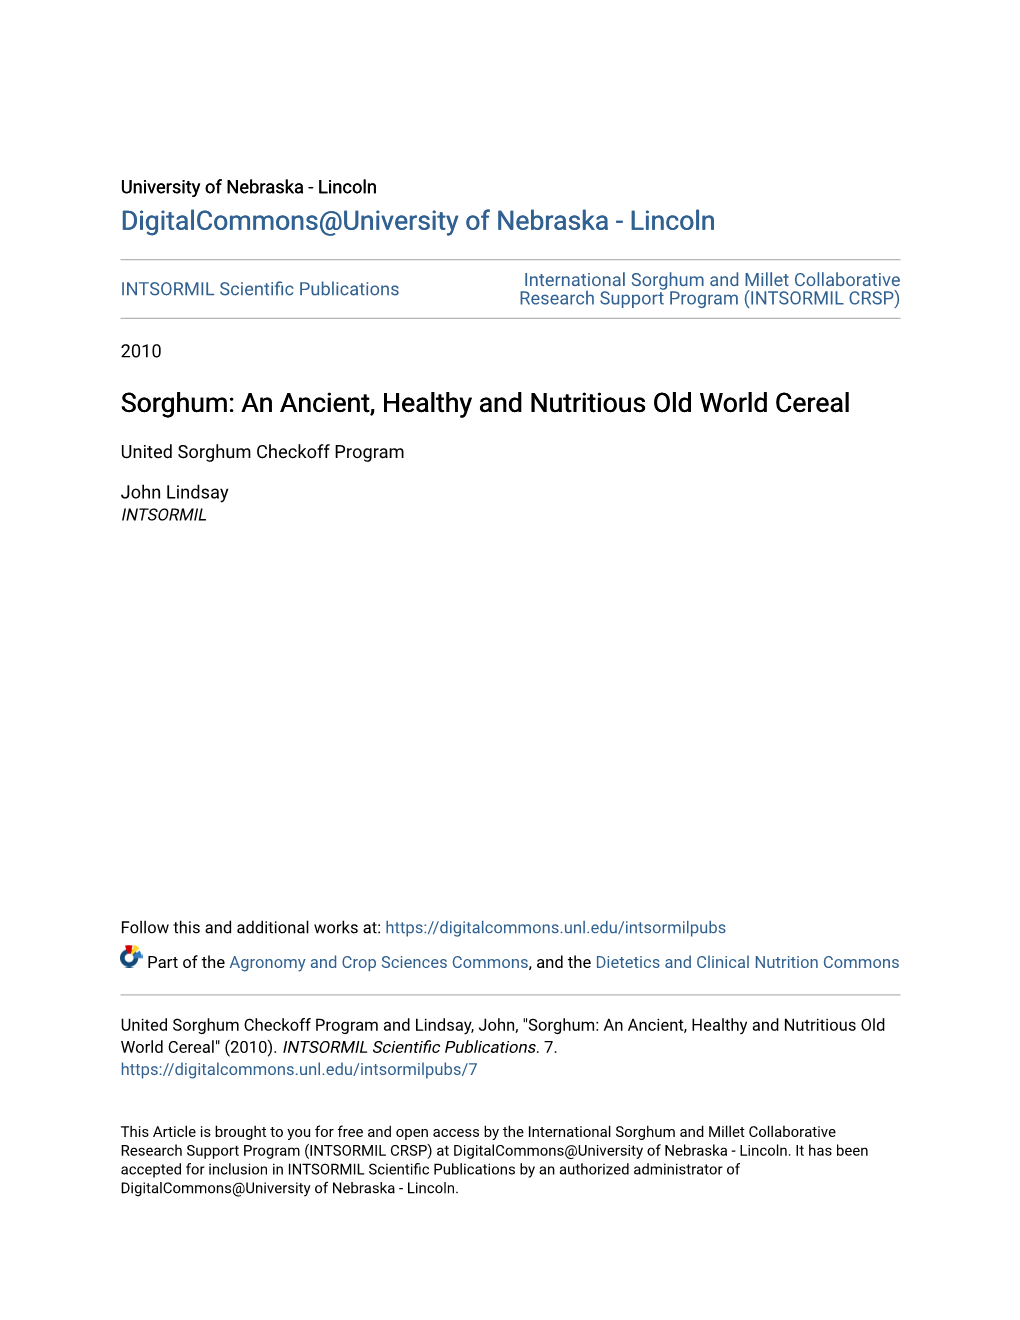 Sorghum and Millet Collaborative INTSORMIL Scientific Publications Research Support Program (INTSORMIL CRSP)